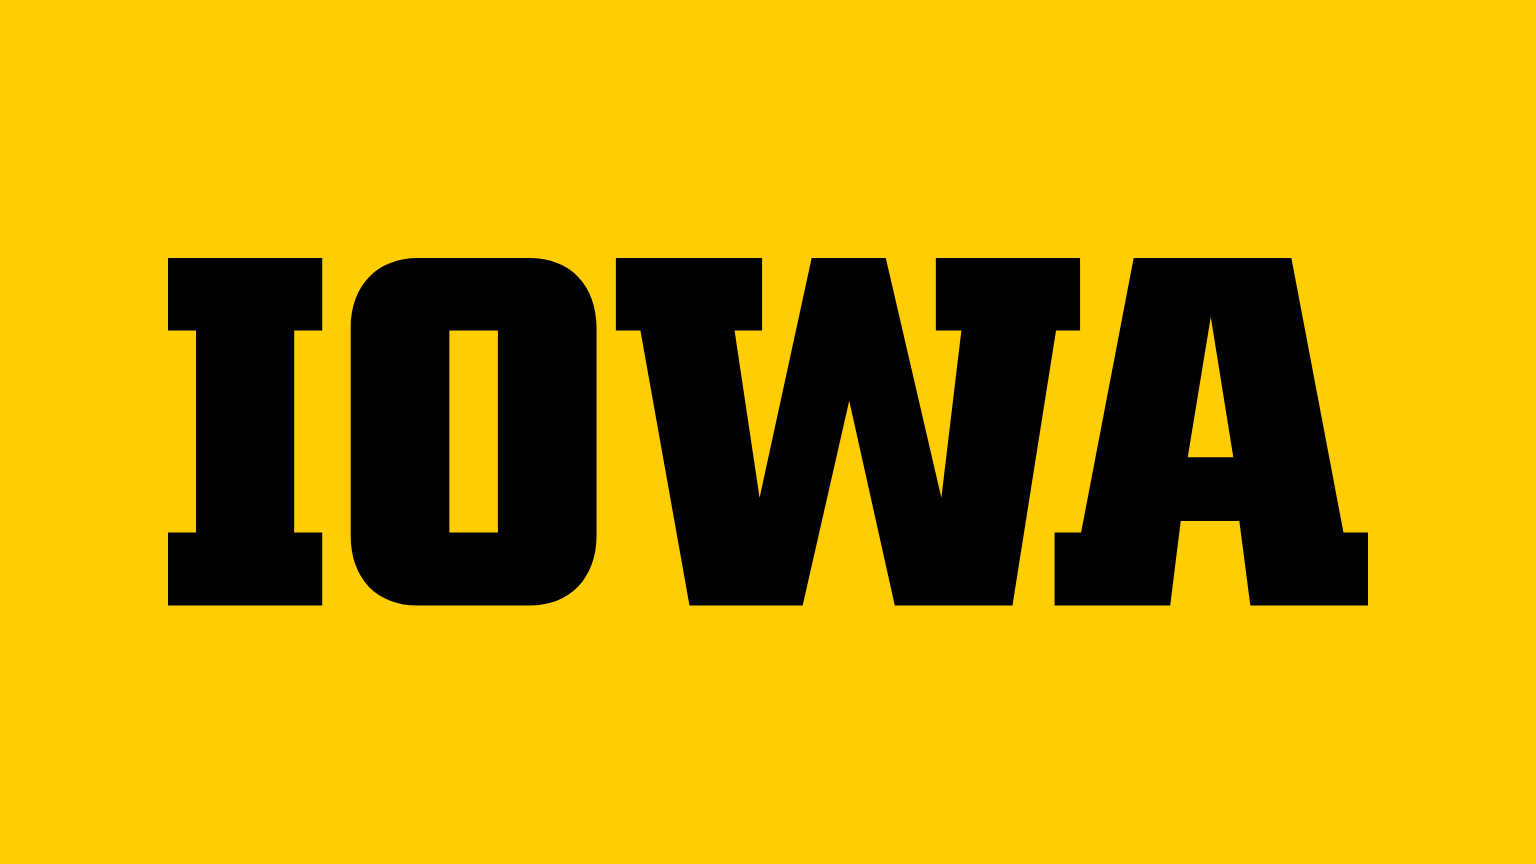 Block IOWA logo in black on gold background